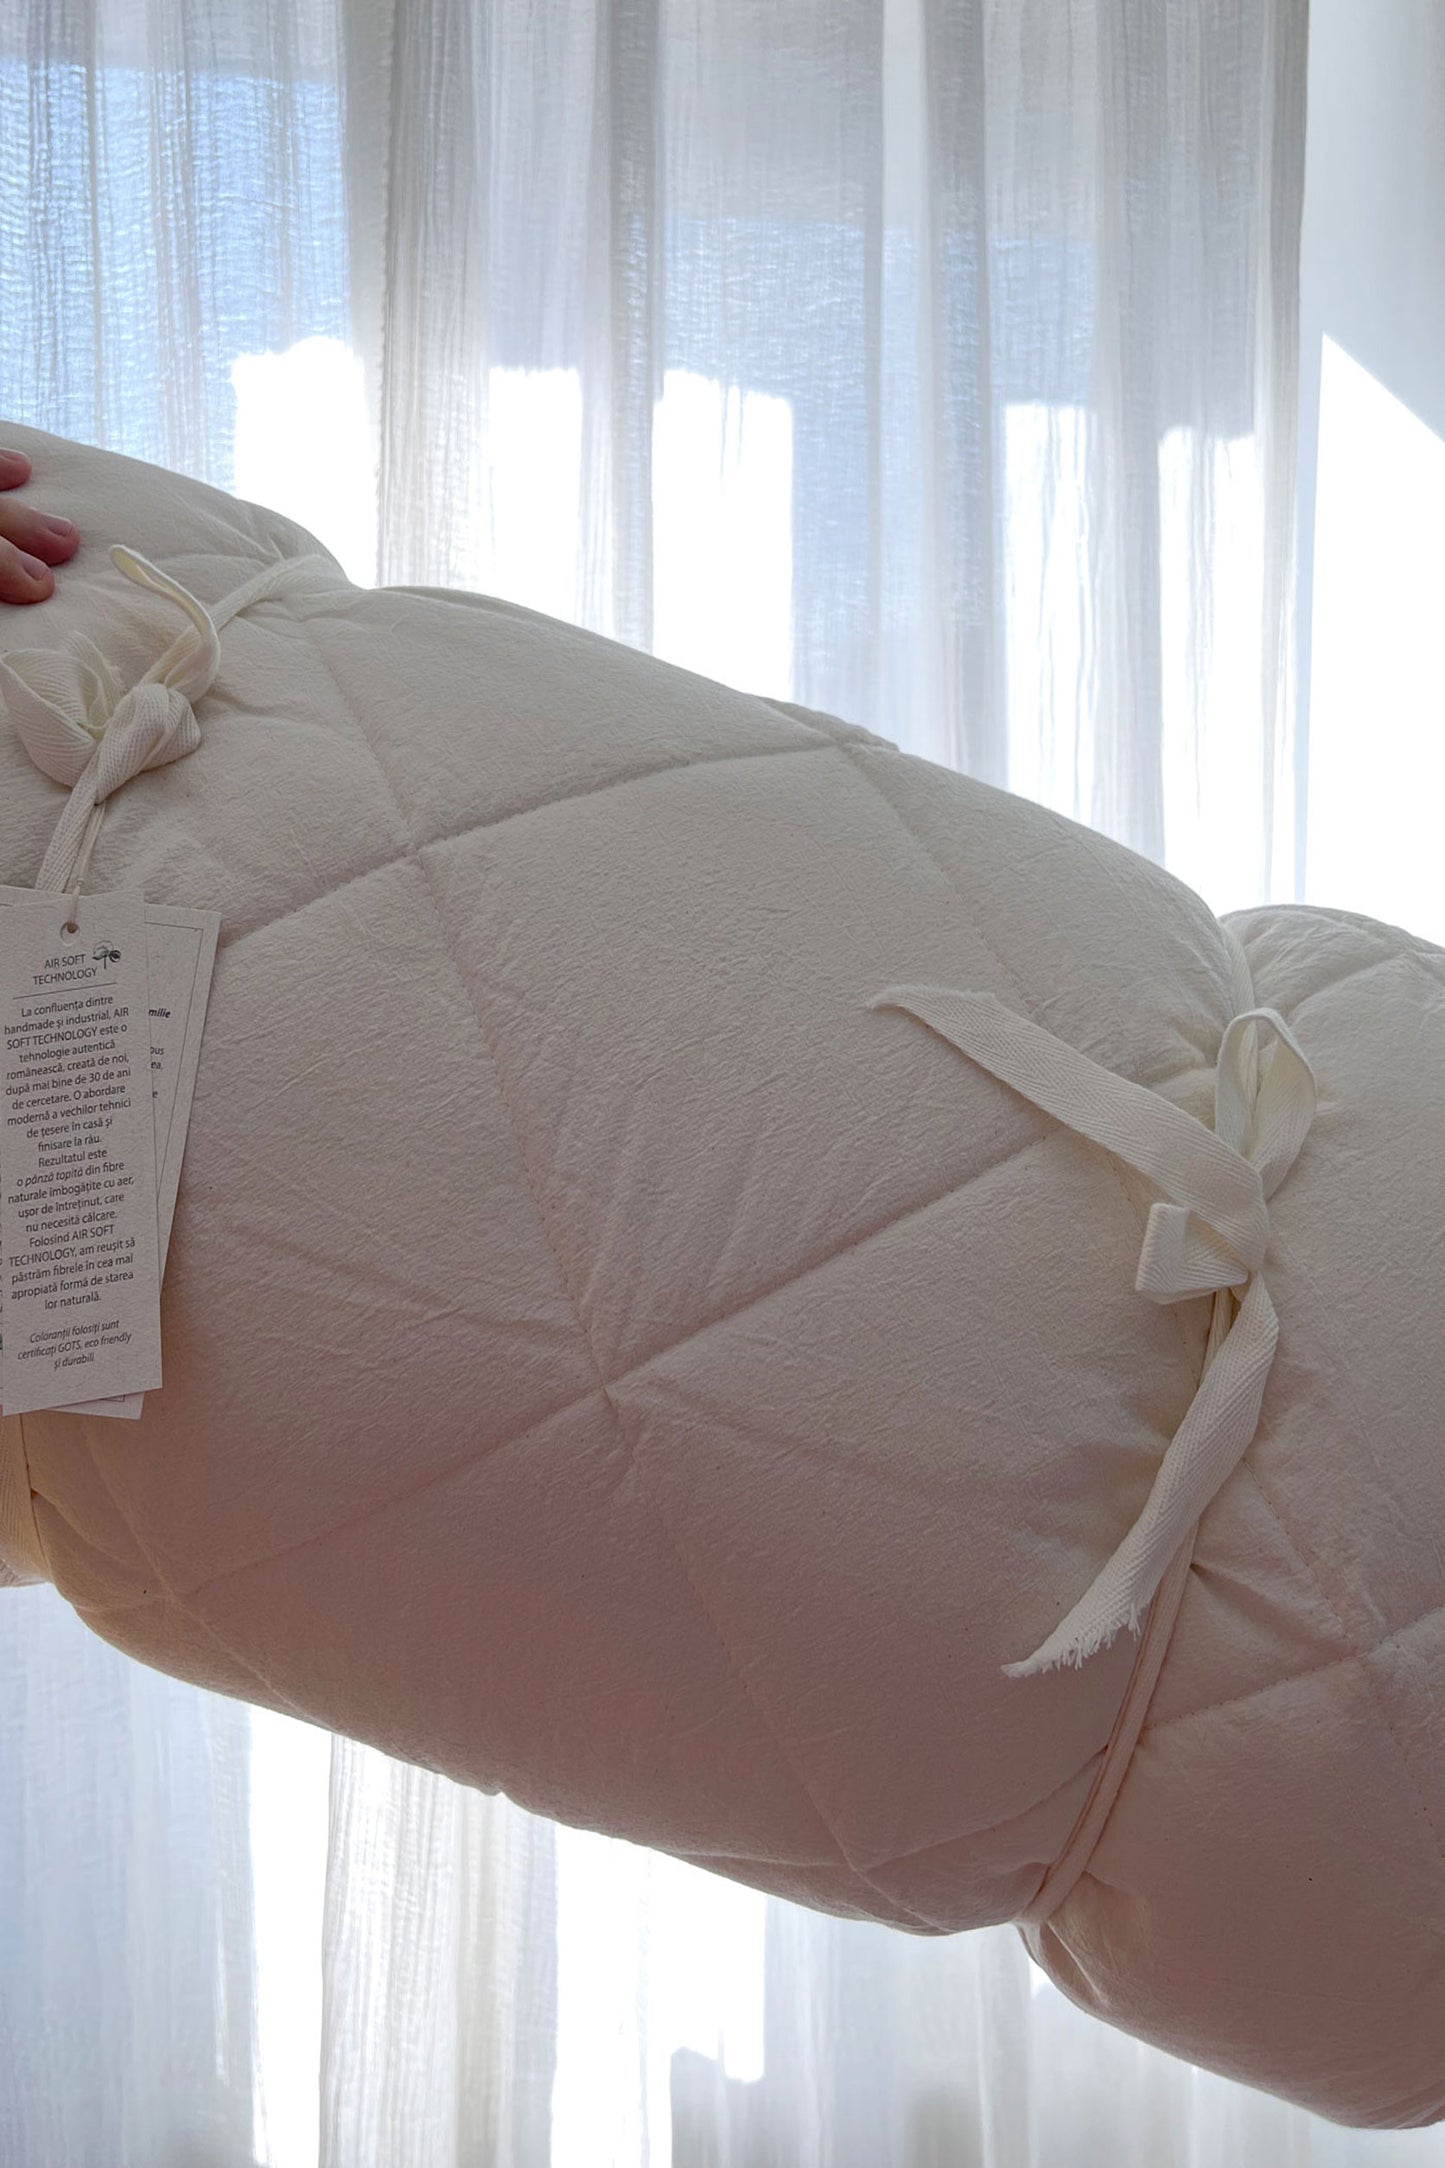 DeFlorian Comforter in Natural Cotton